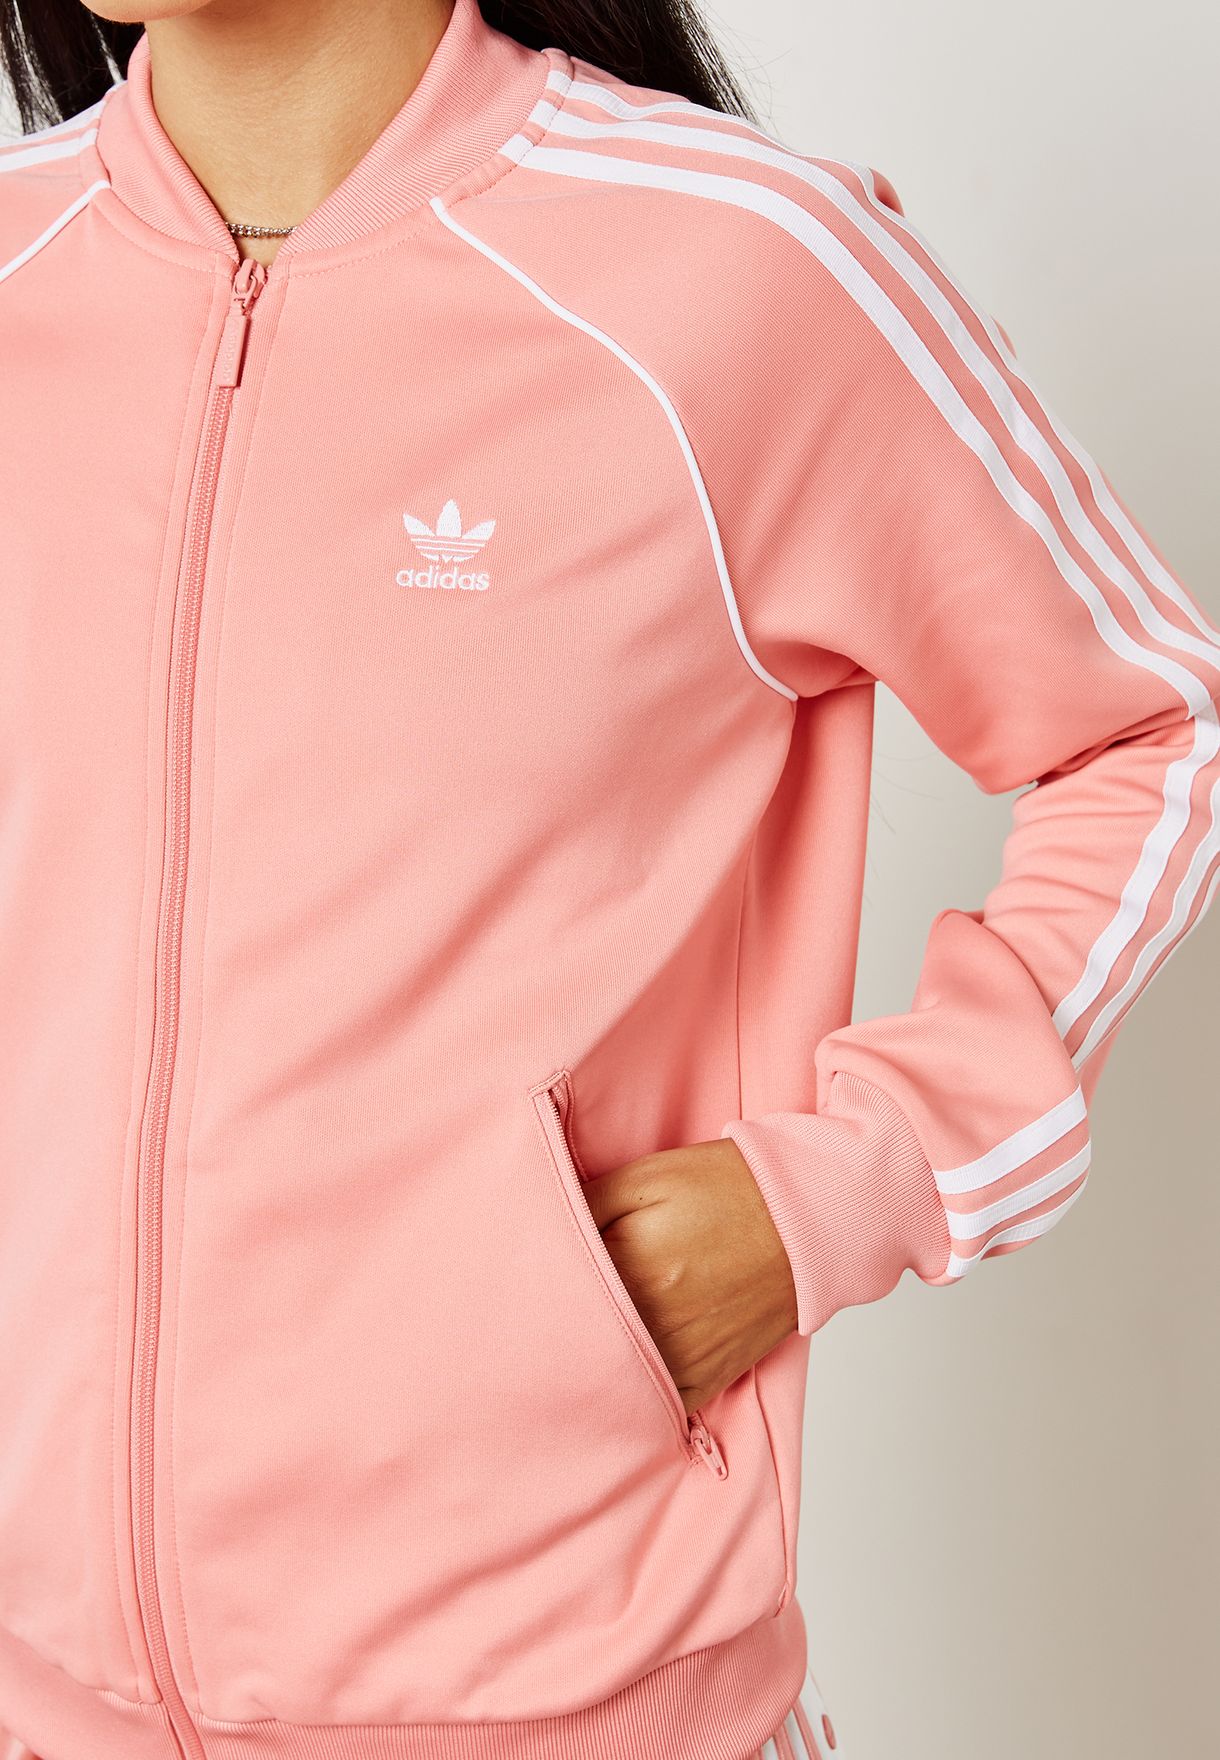 dusty pink adidas jacket